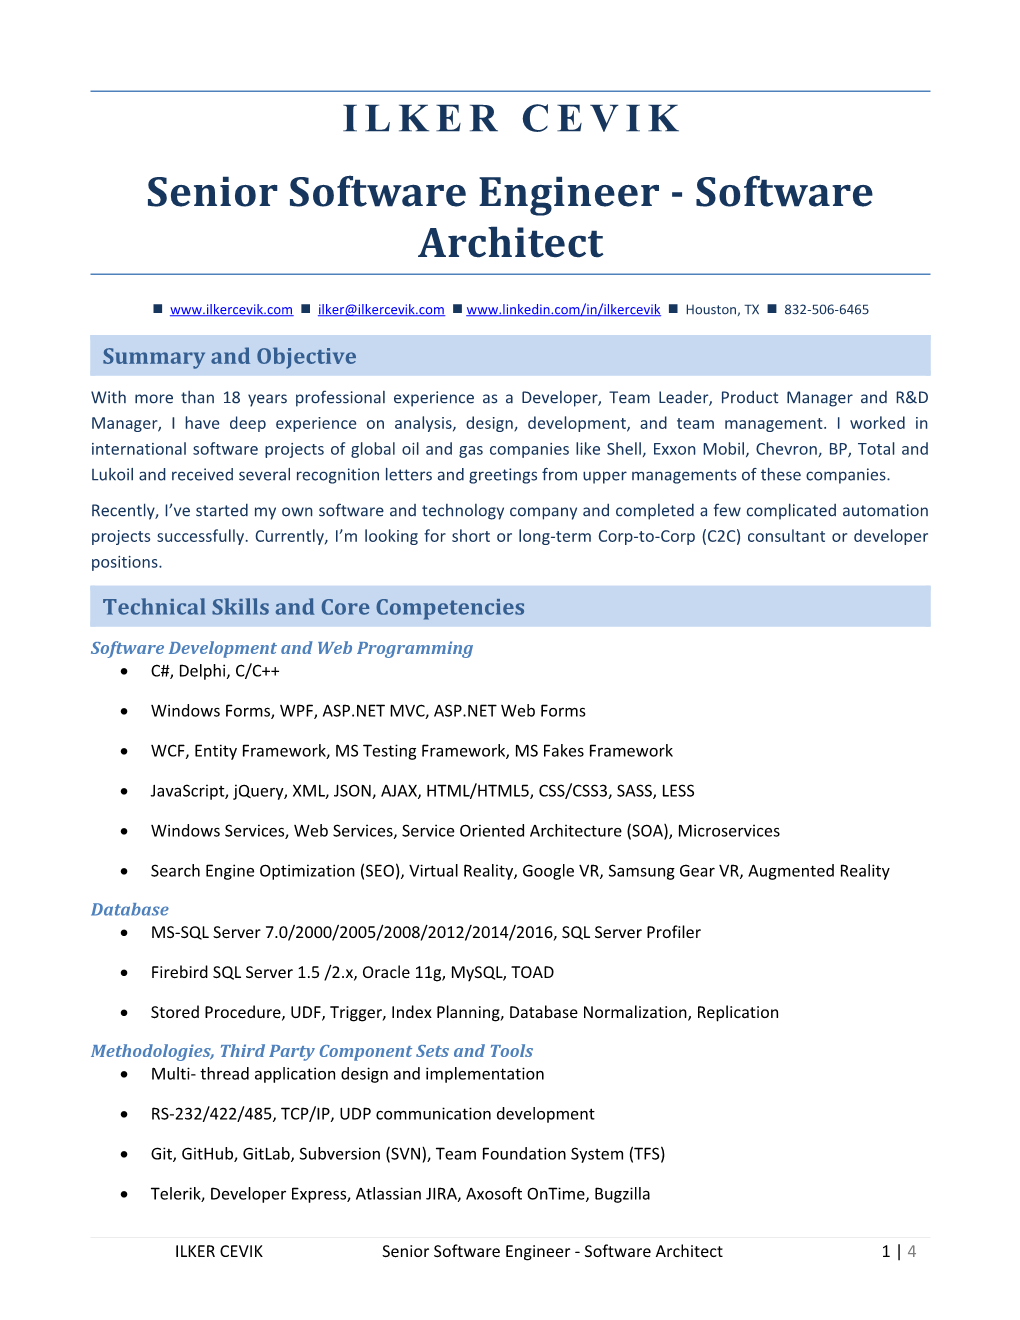 Senior Software Engineer - Software Architect